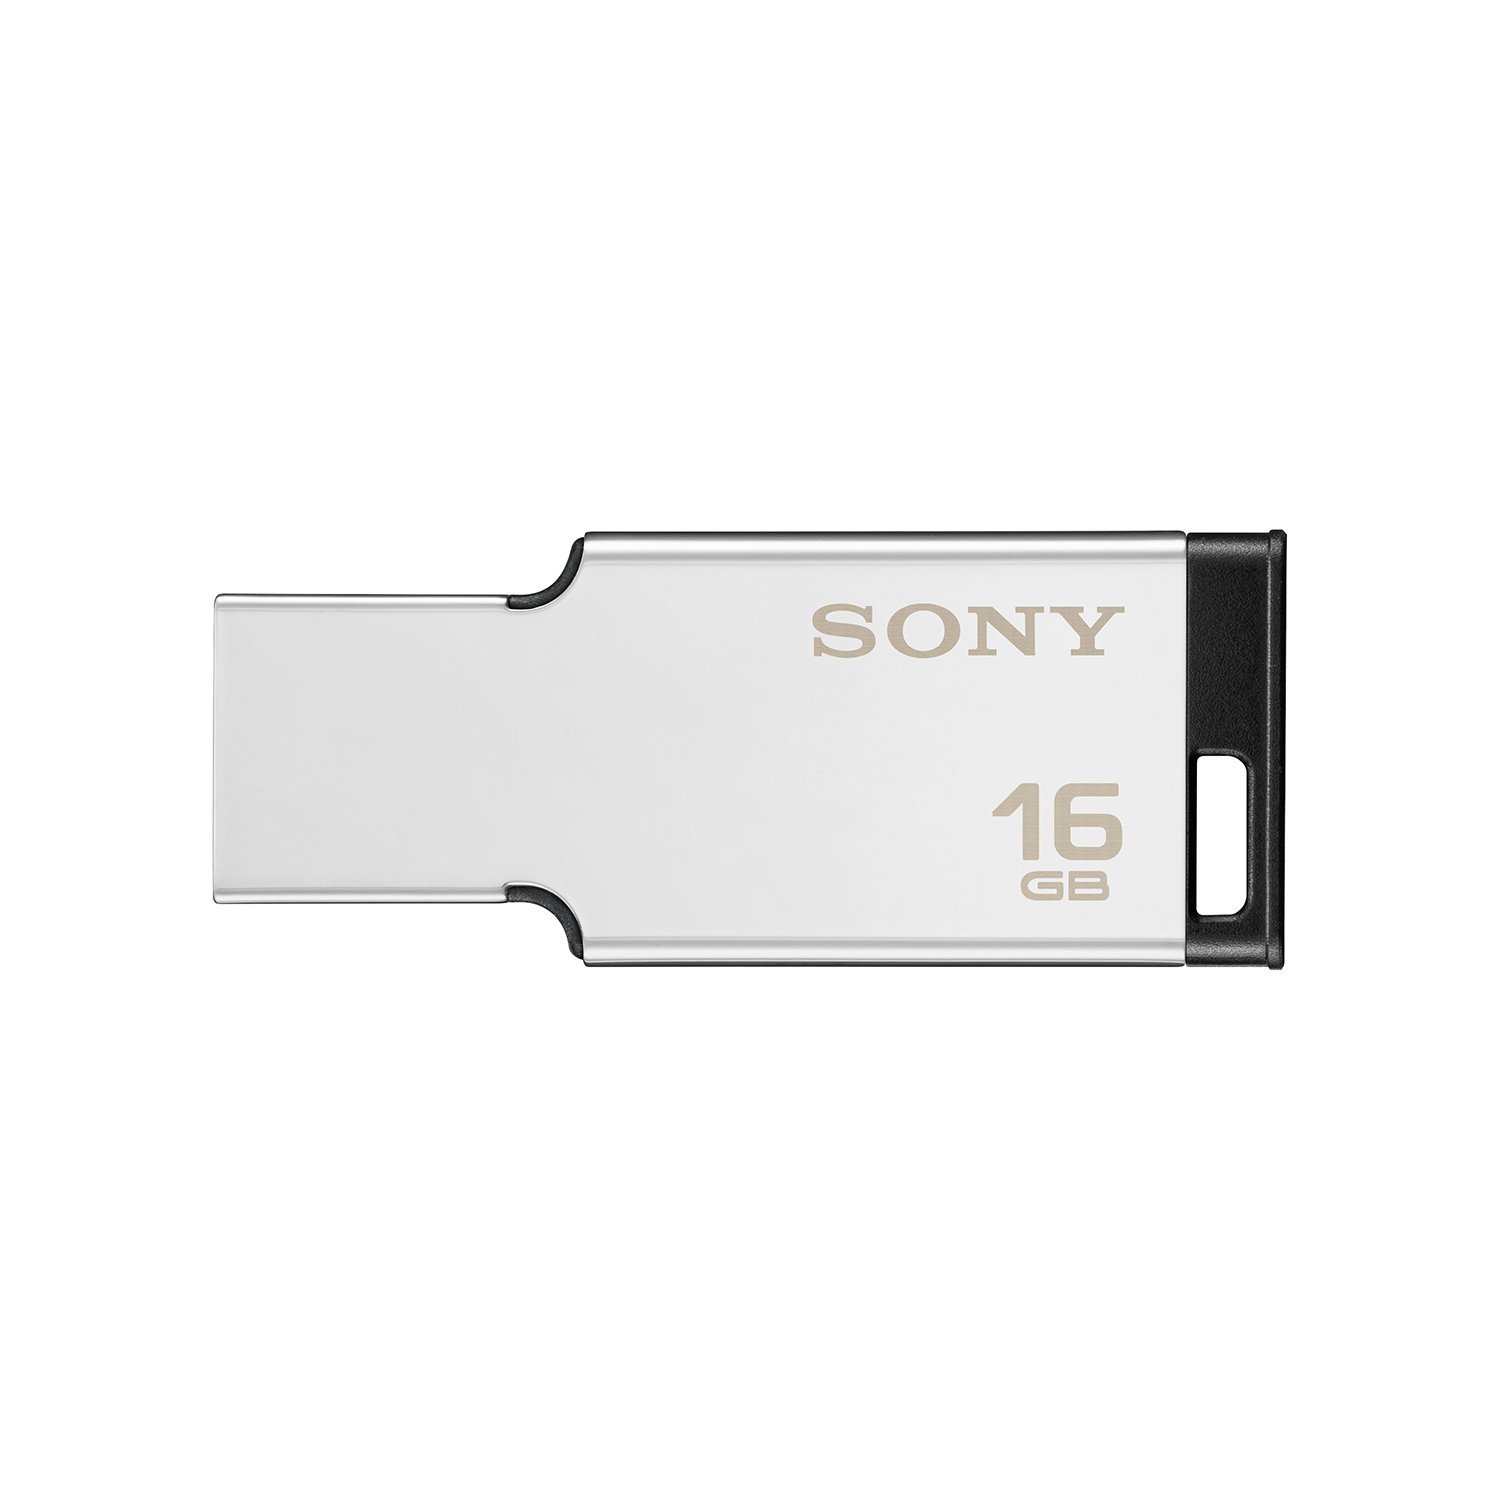 Sony 16GB USB Metal Pendrive (Silver)